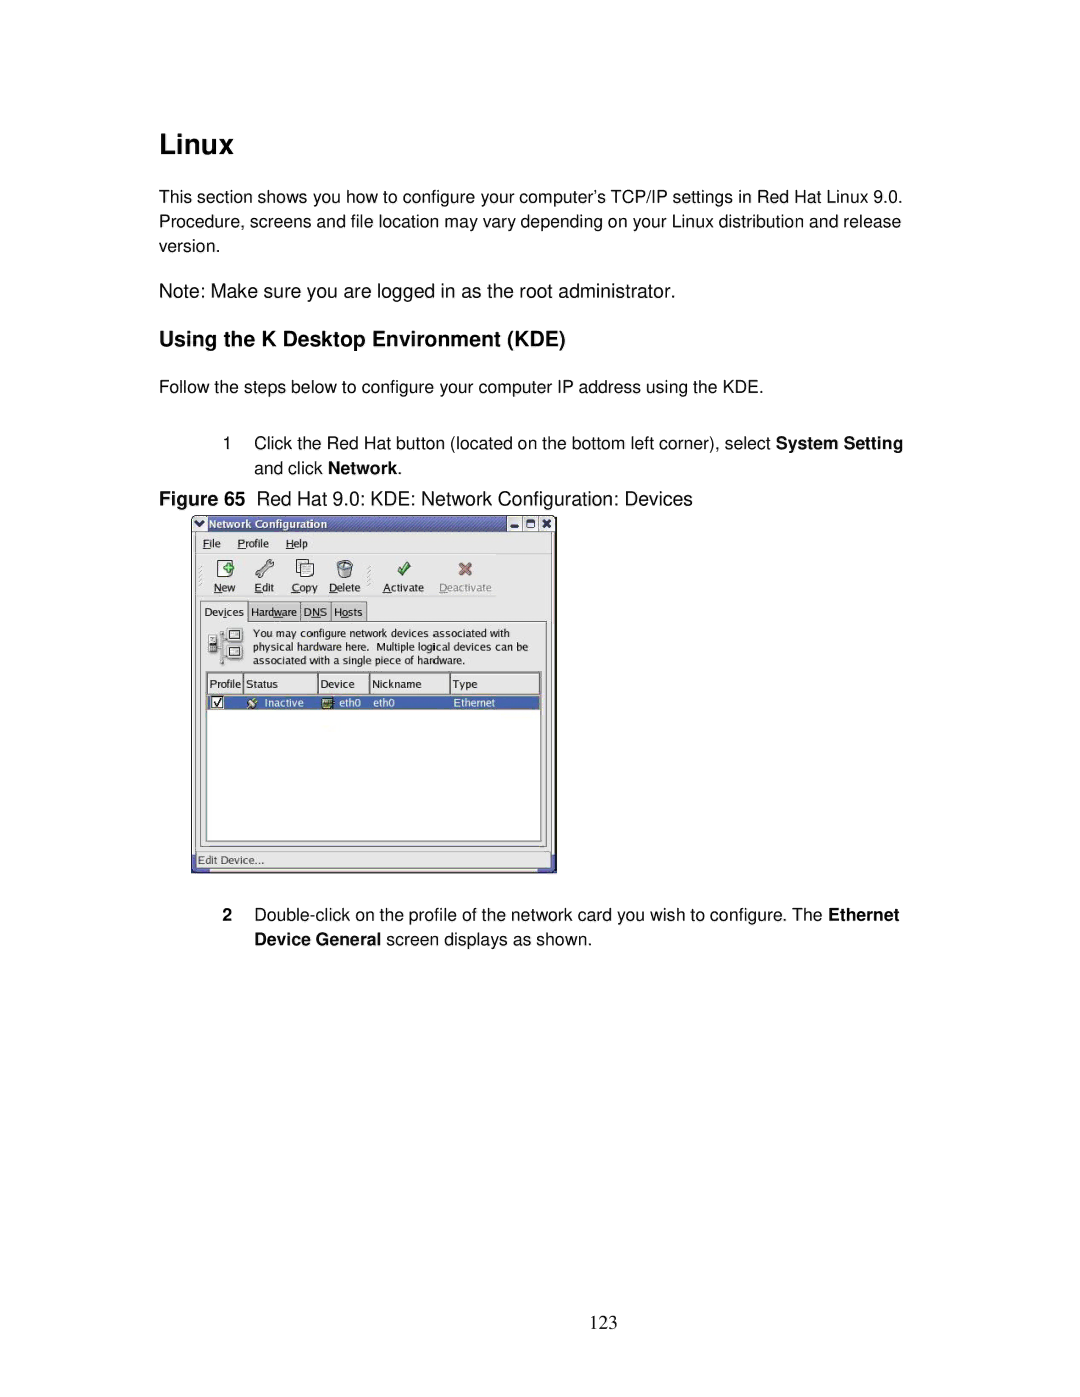 ZyXEL Communications MWR102 manual Linux, Using the K Desktop Environment KDE, 123 